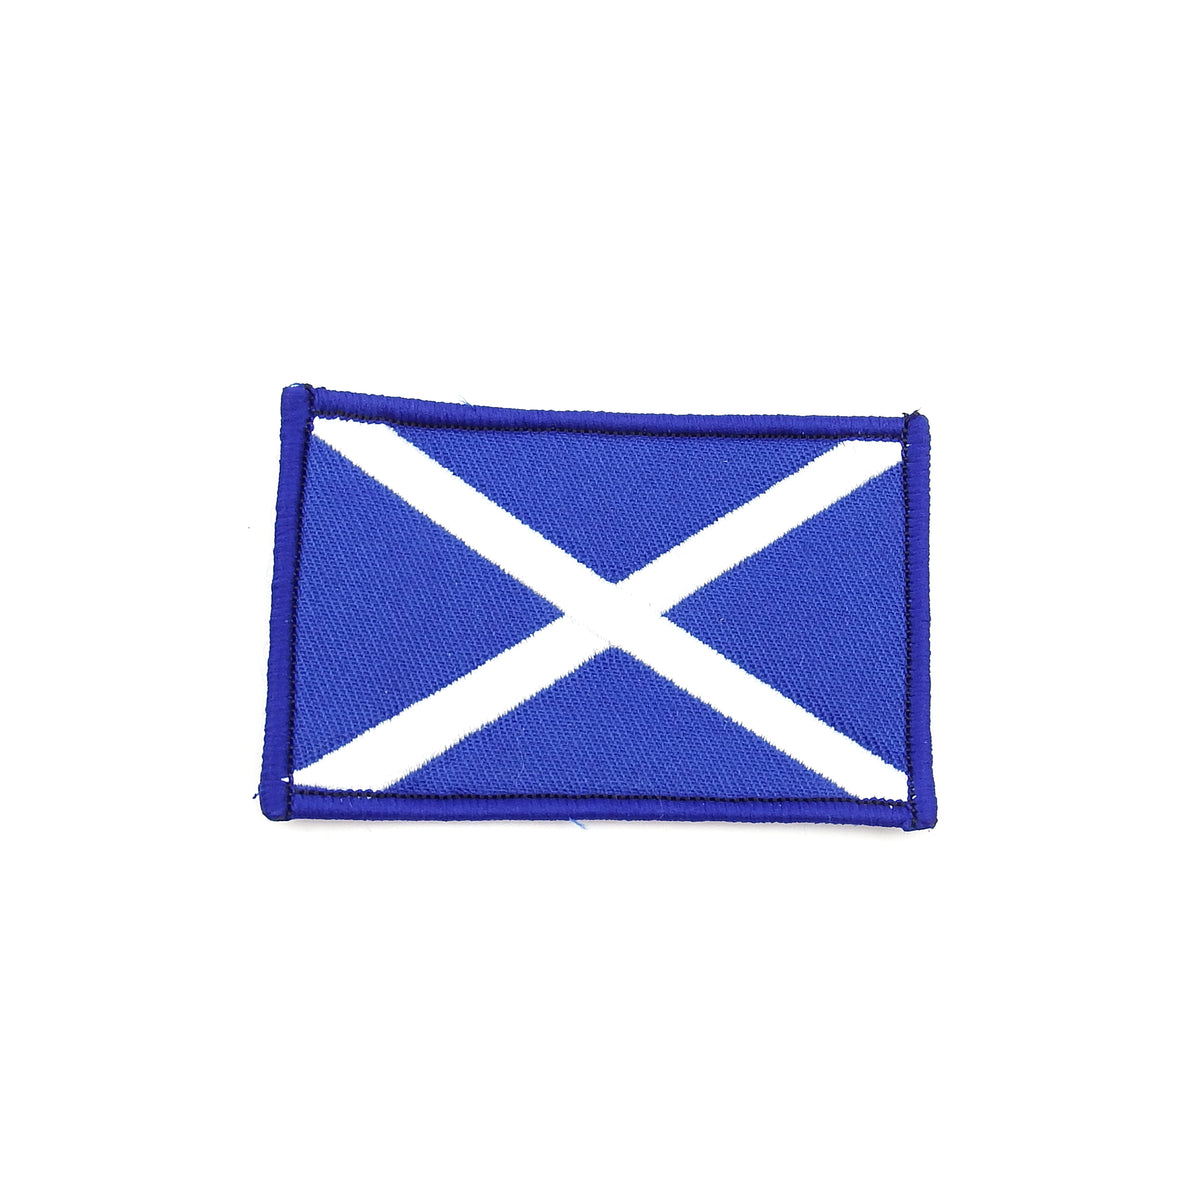 Scotland Flag Patch 8cm x 5cm - Sew On